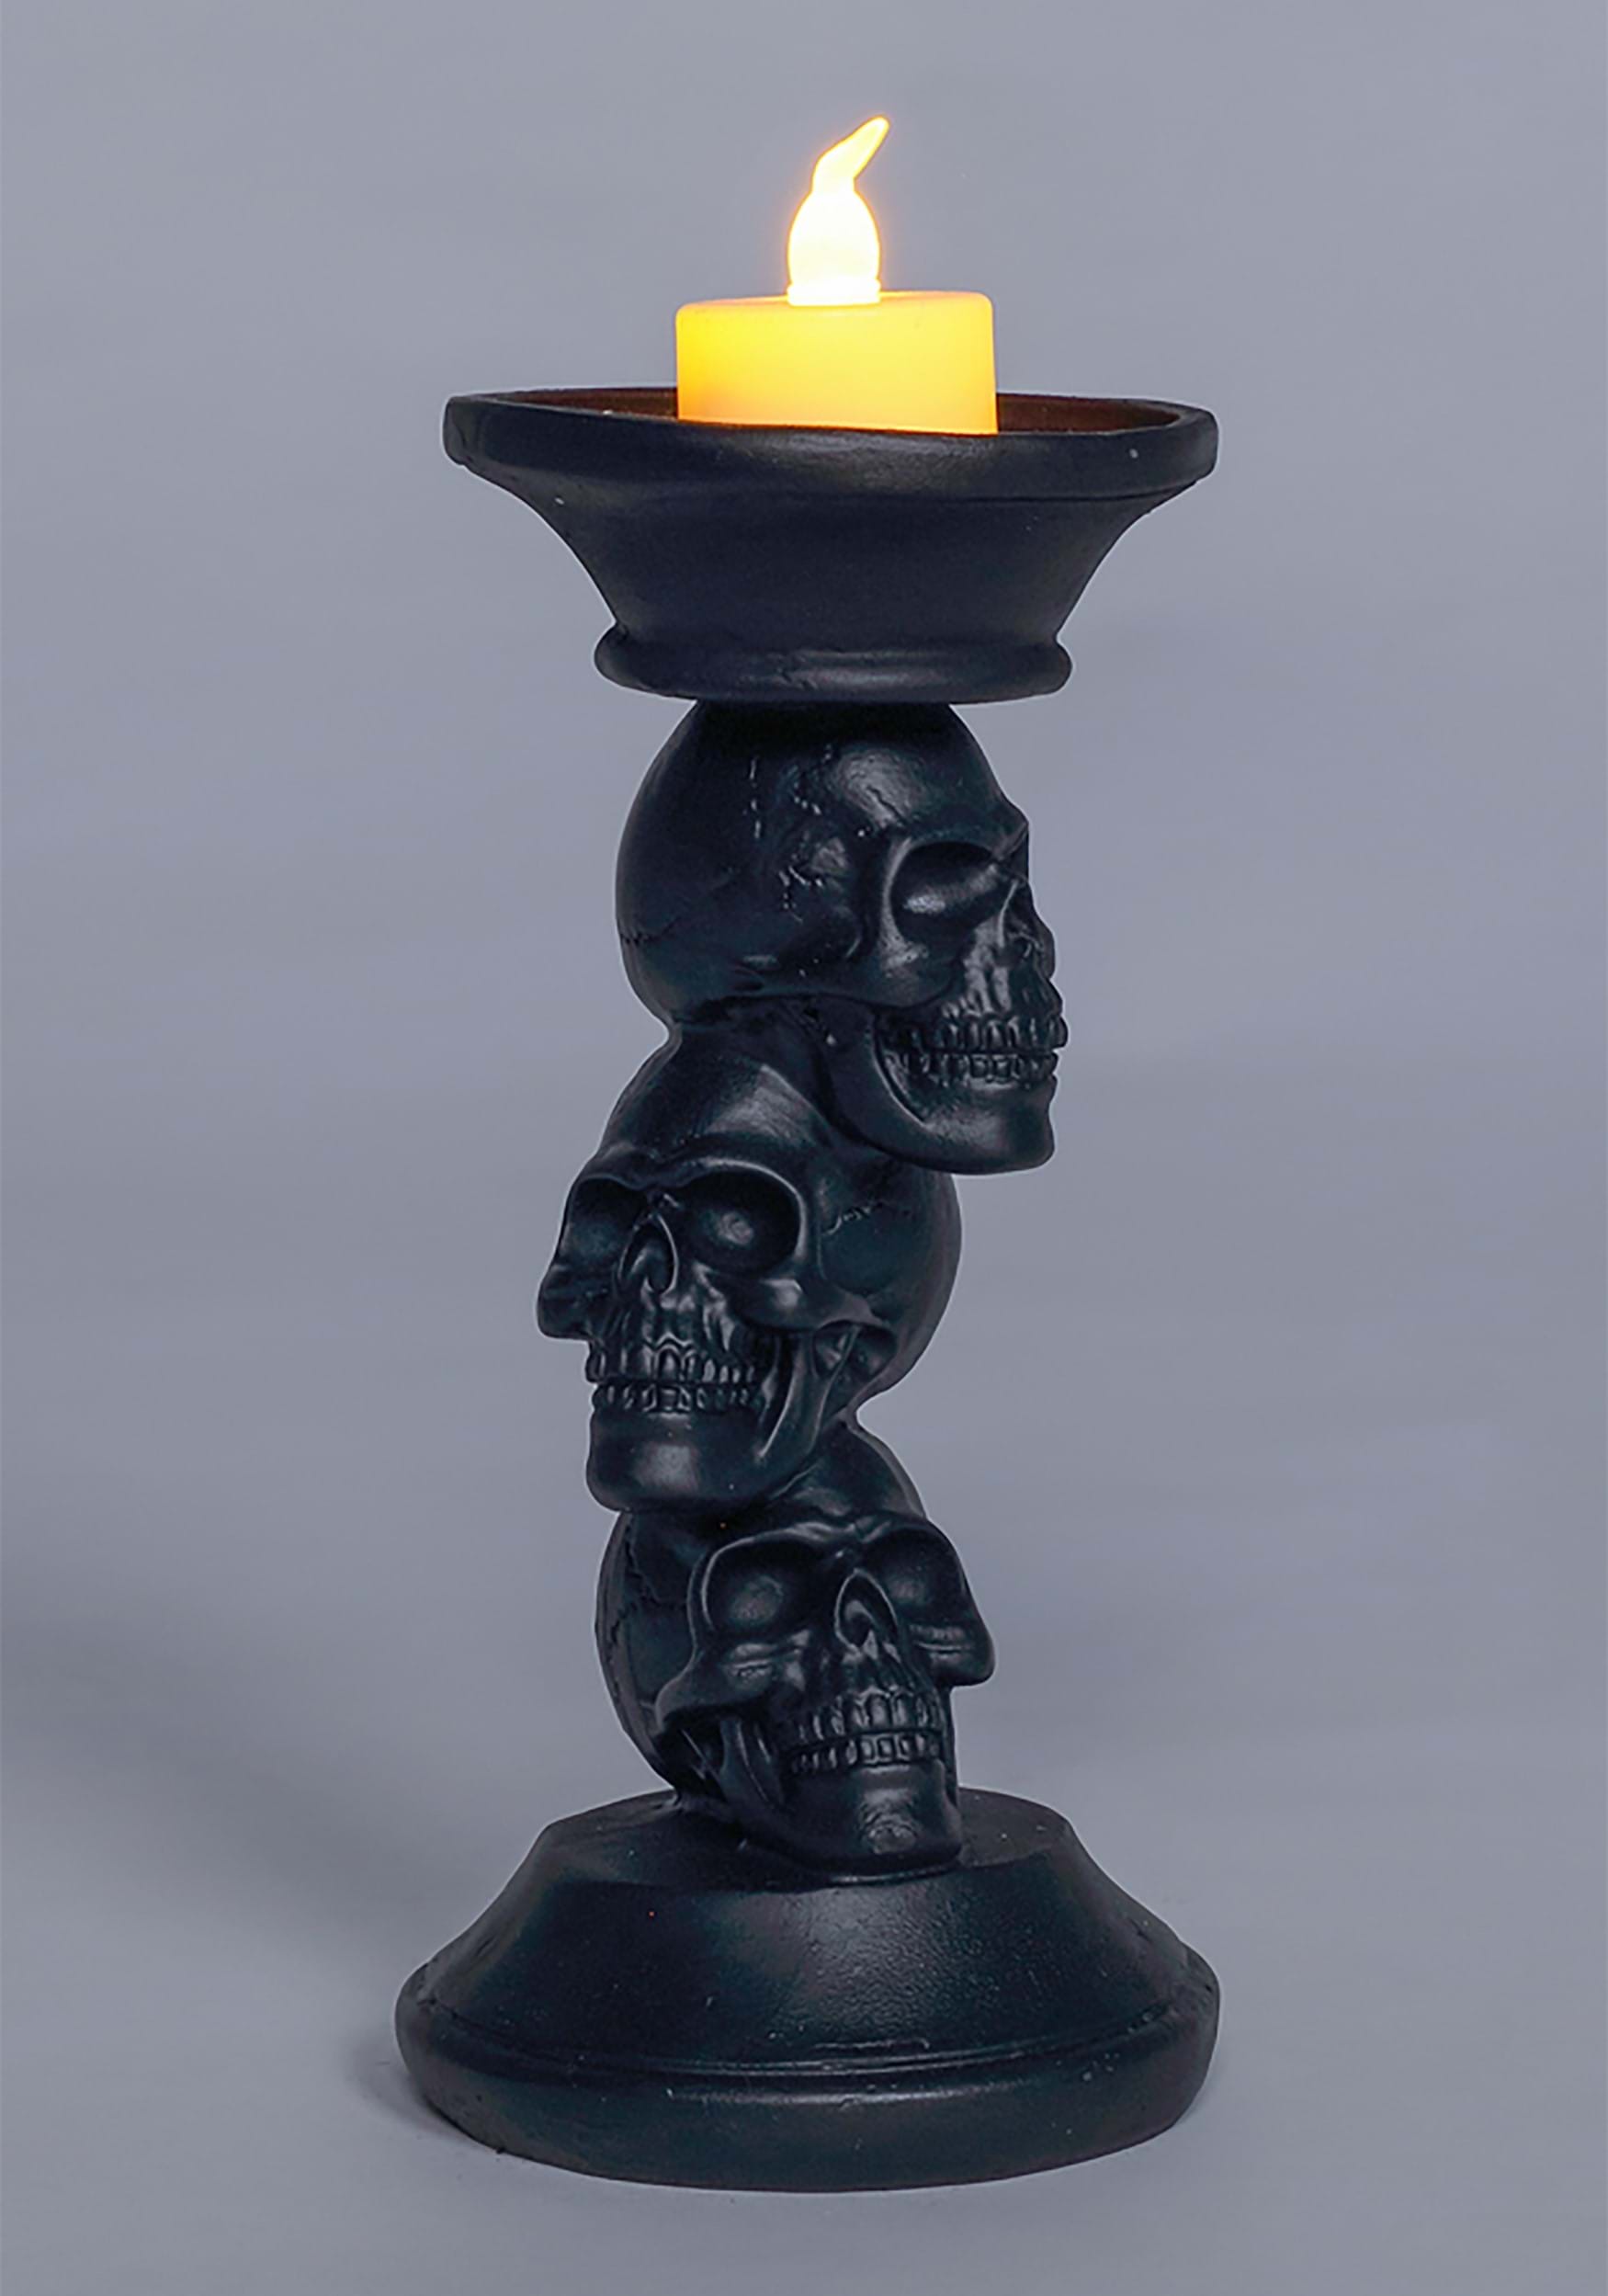 7" Resin Halloween Black Skull Candle Holder Decoration - Scary Decor